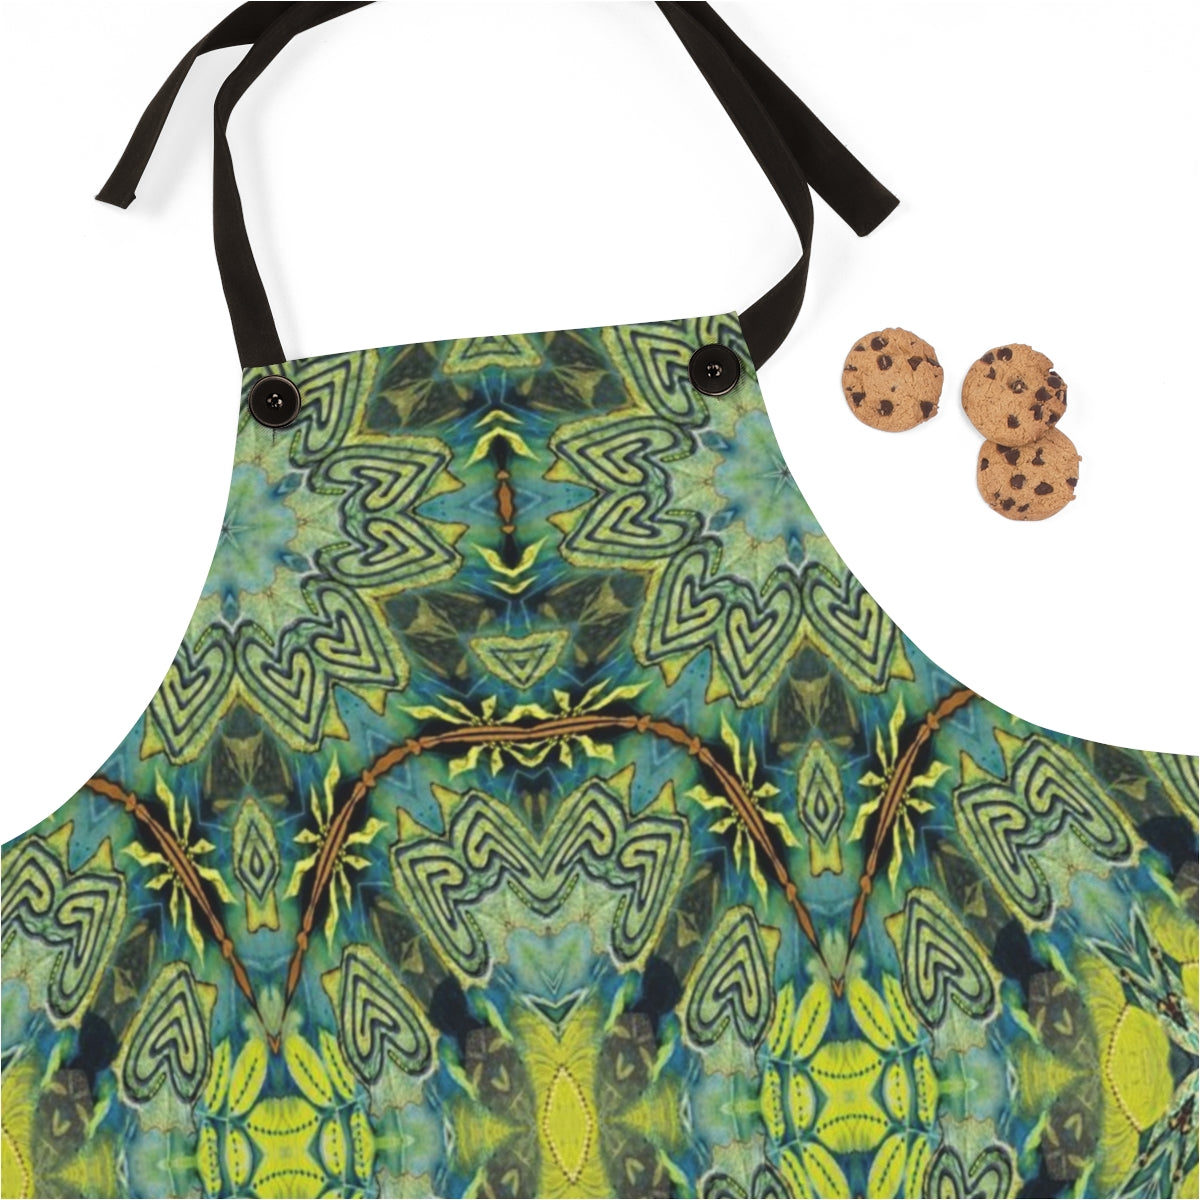 Navy blue apron with a green batik like pattern